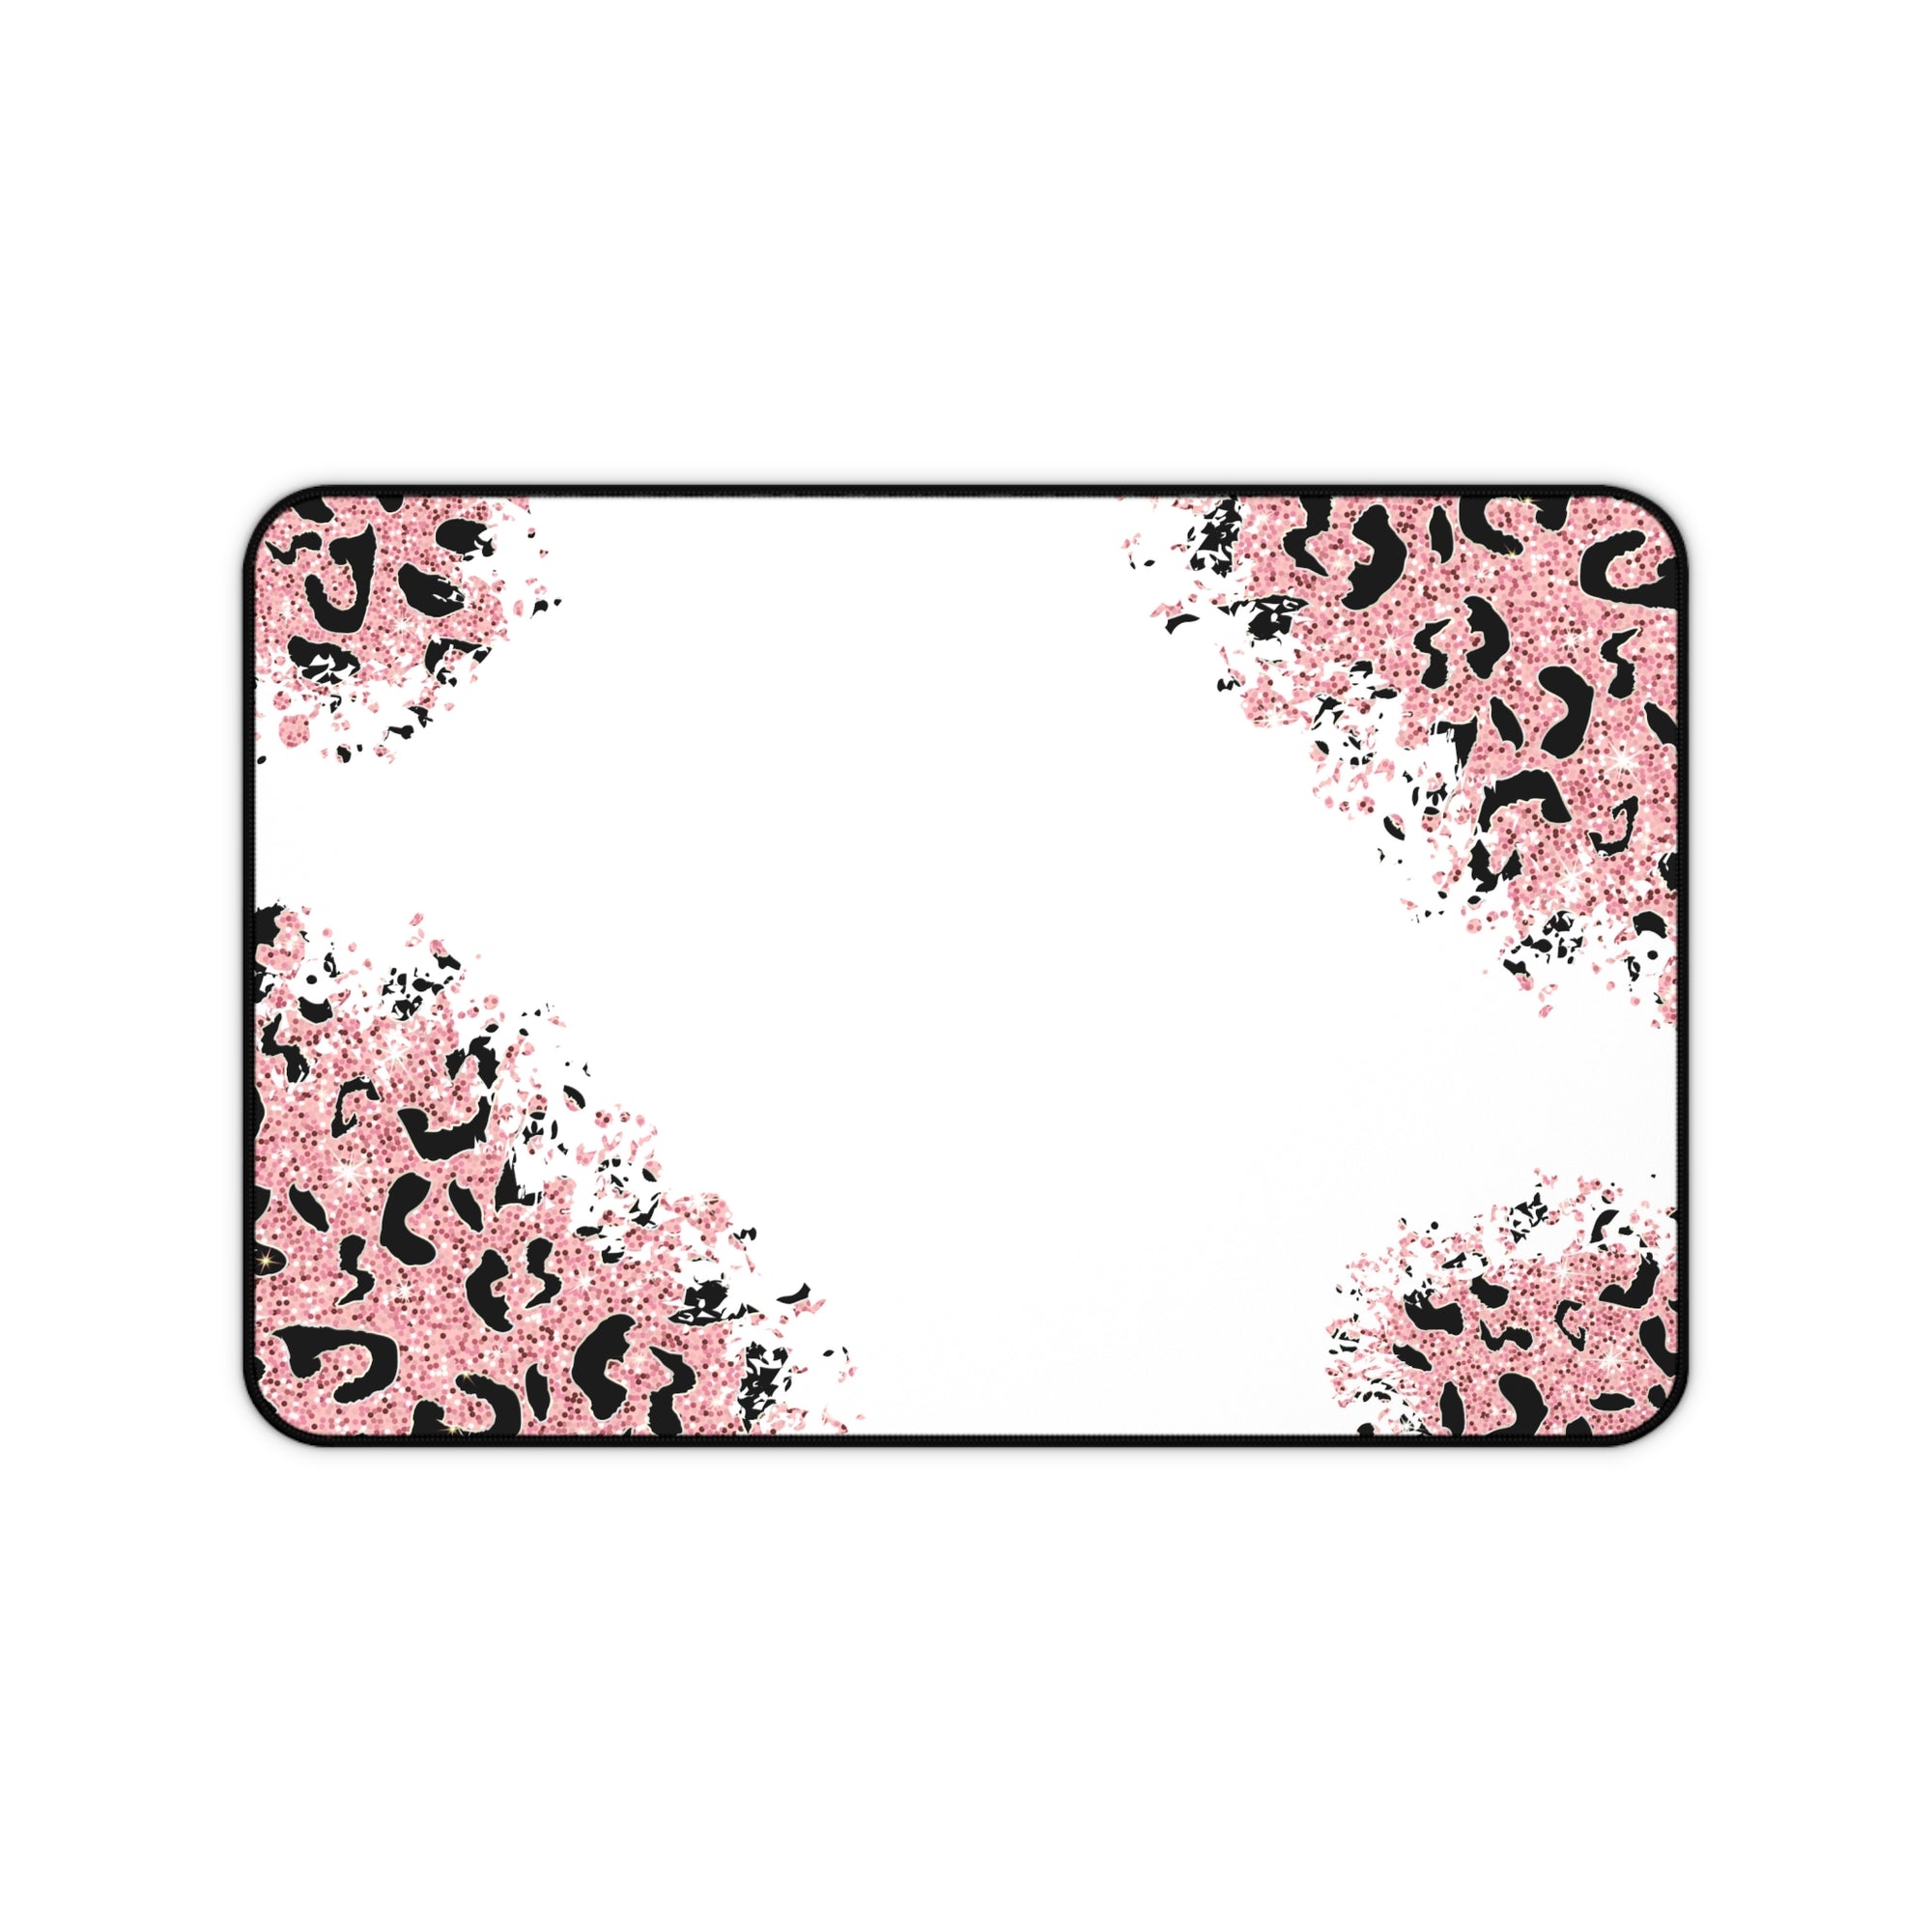 Pink and black cheetah print